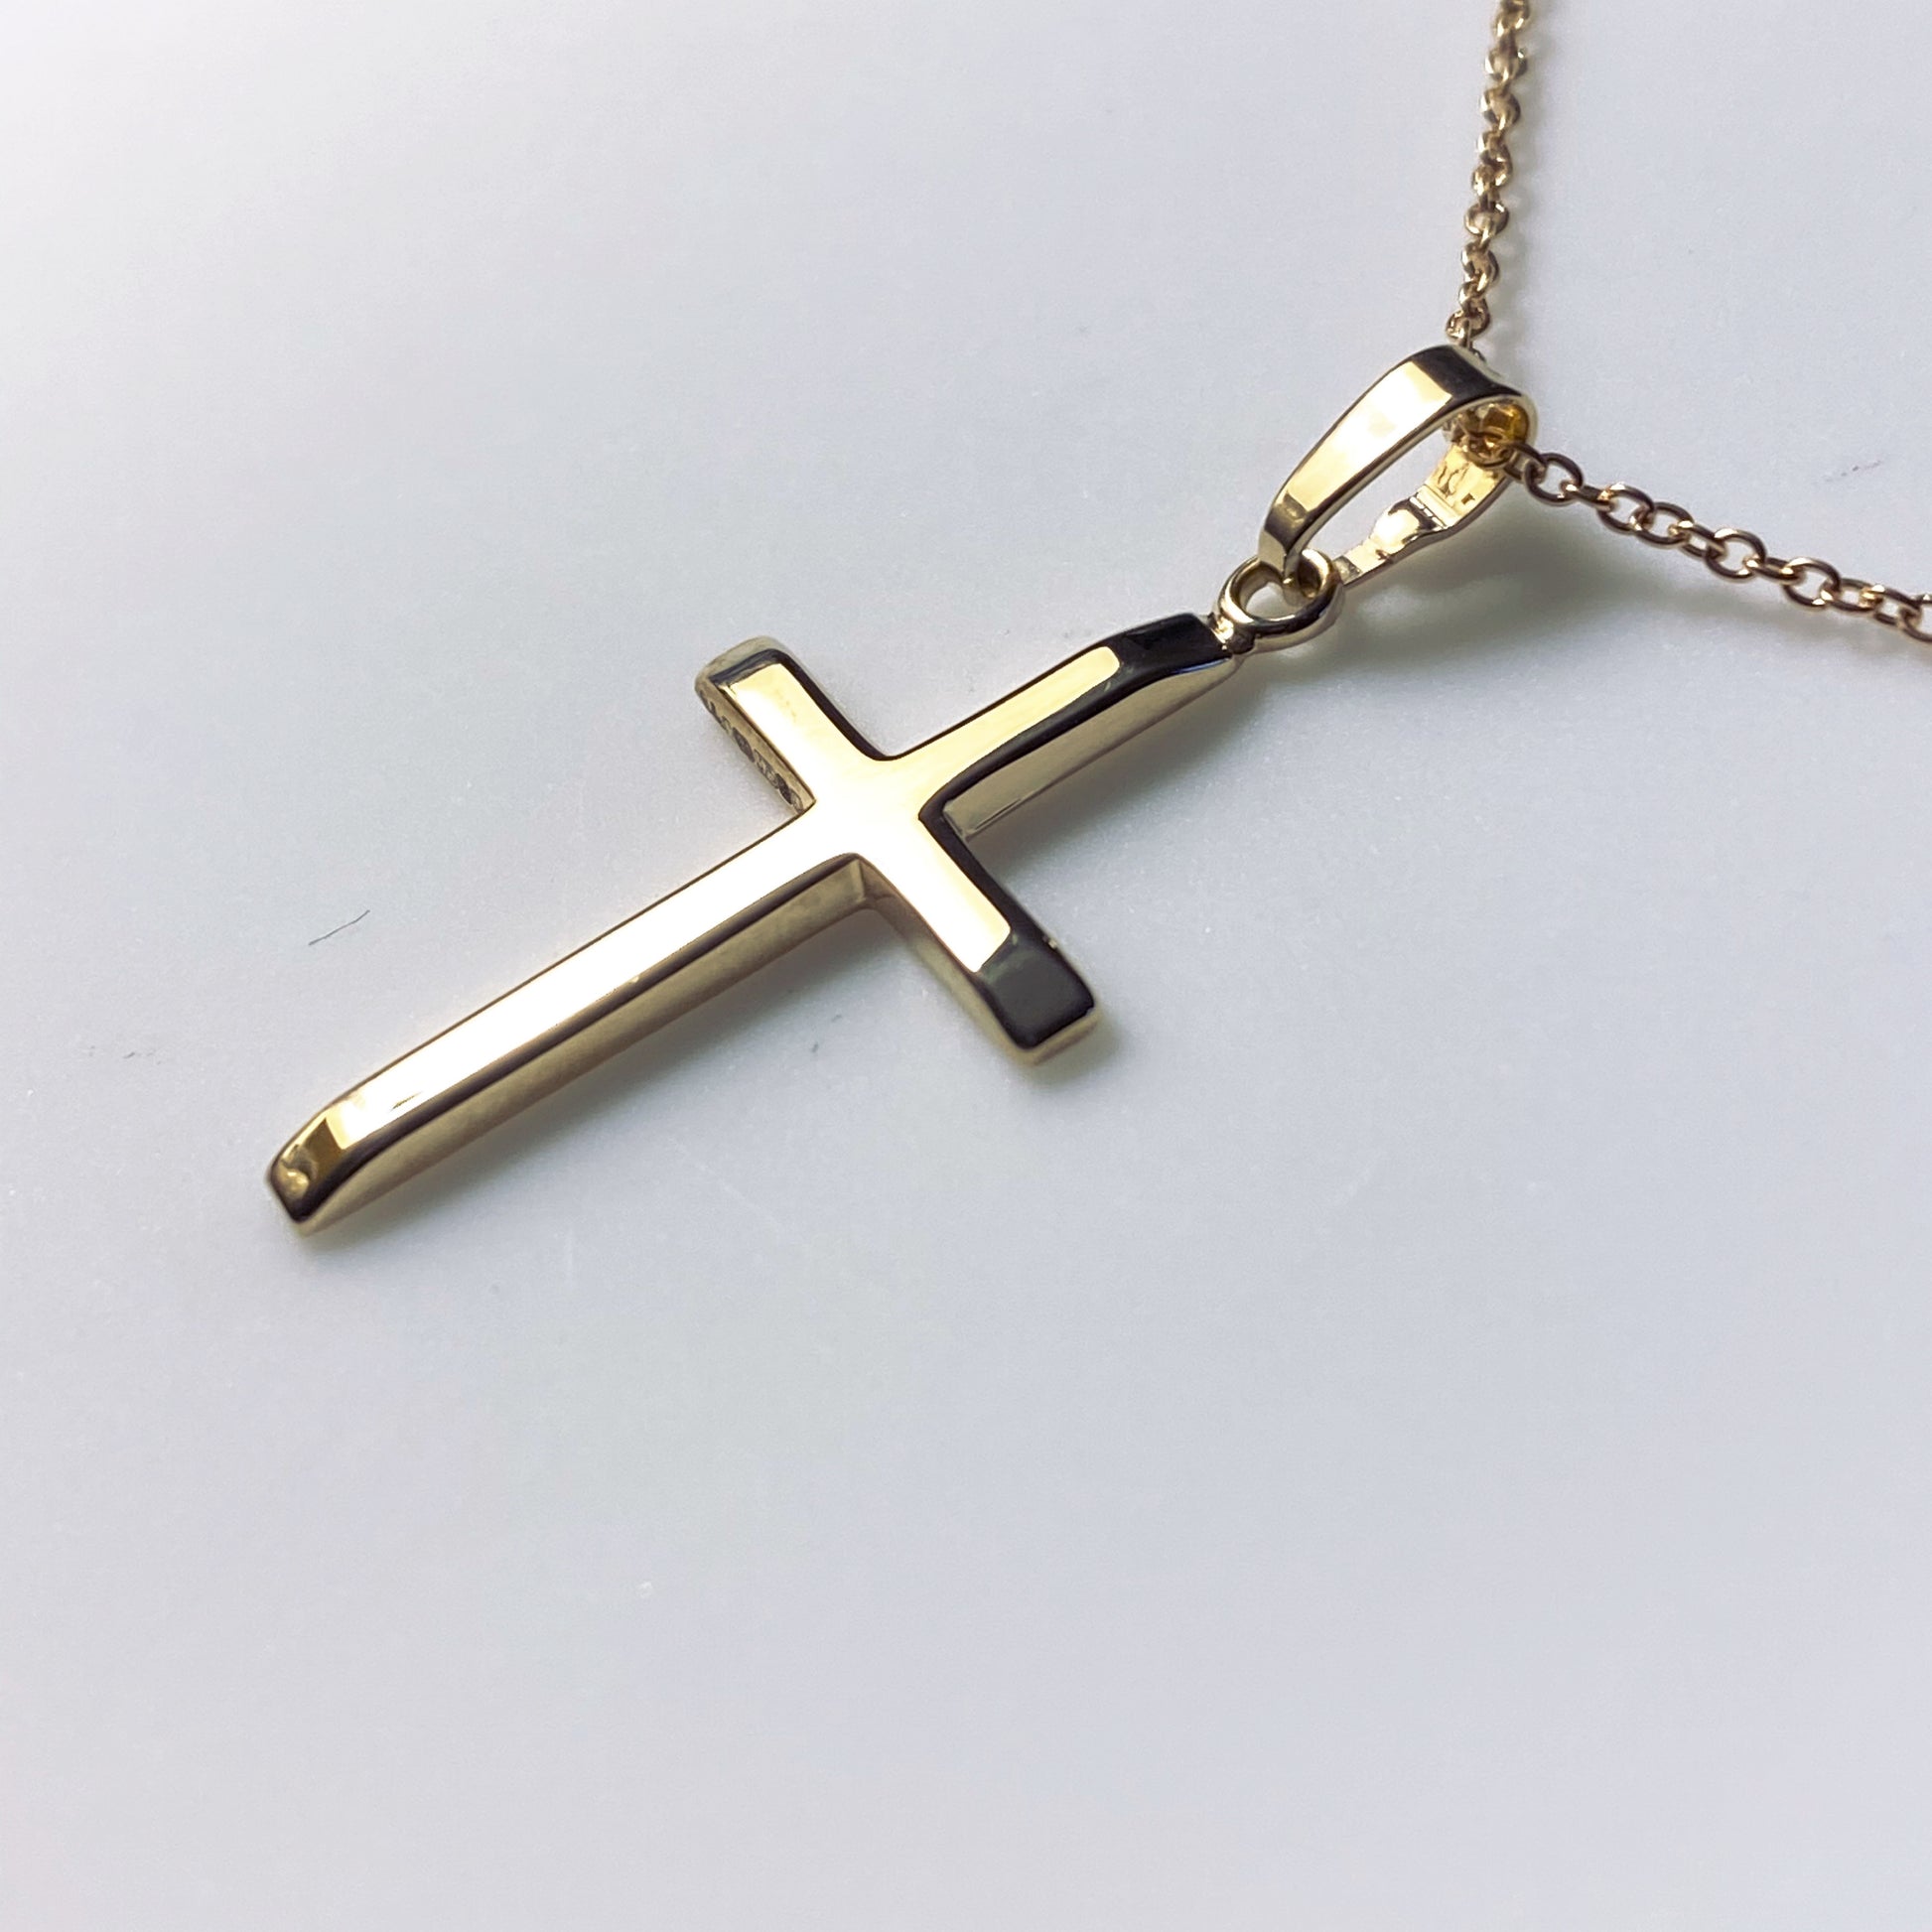 9ct Yellow Gold Solid Cross Necklace - Medium - John Ross Jewellers